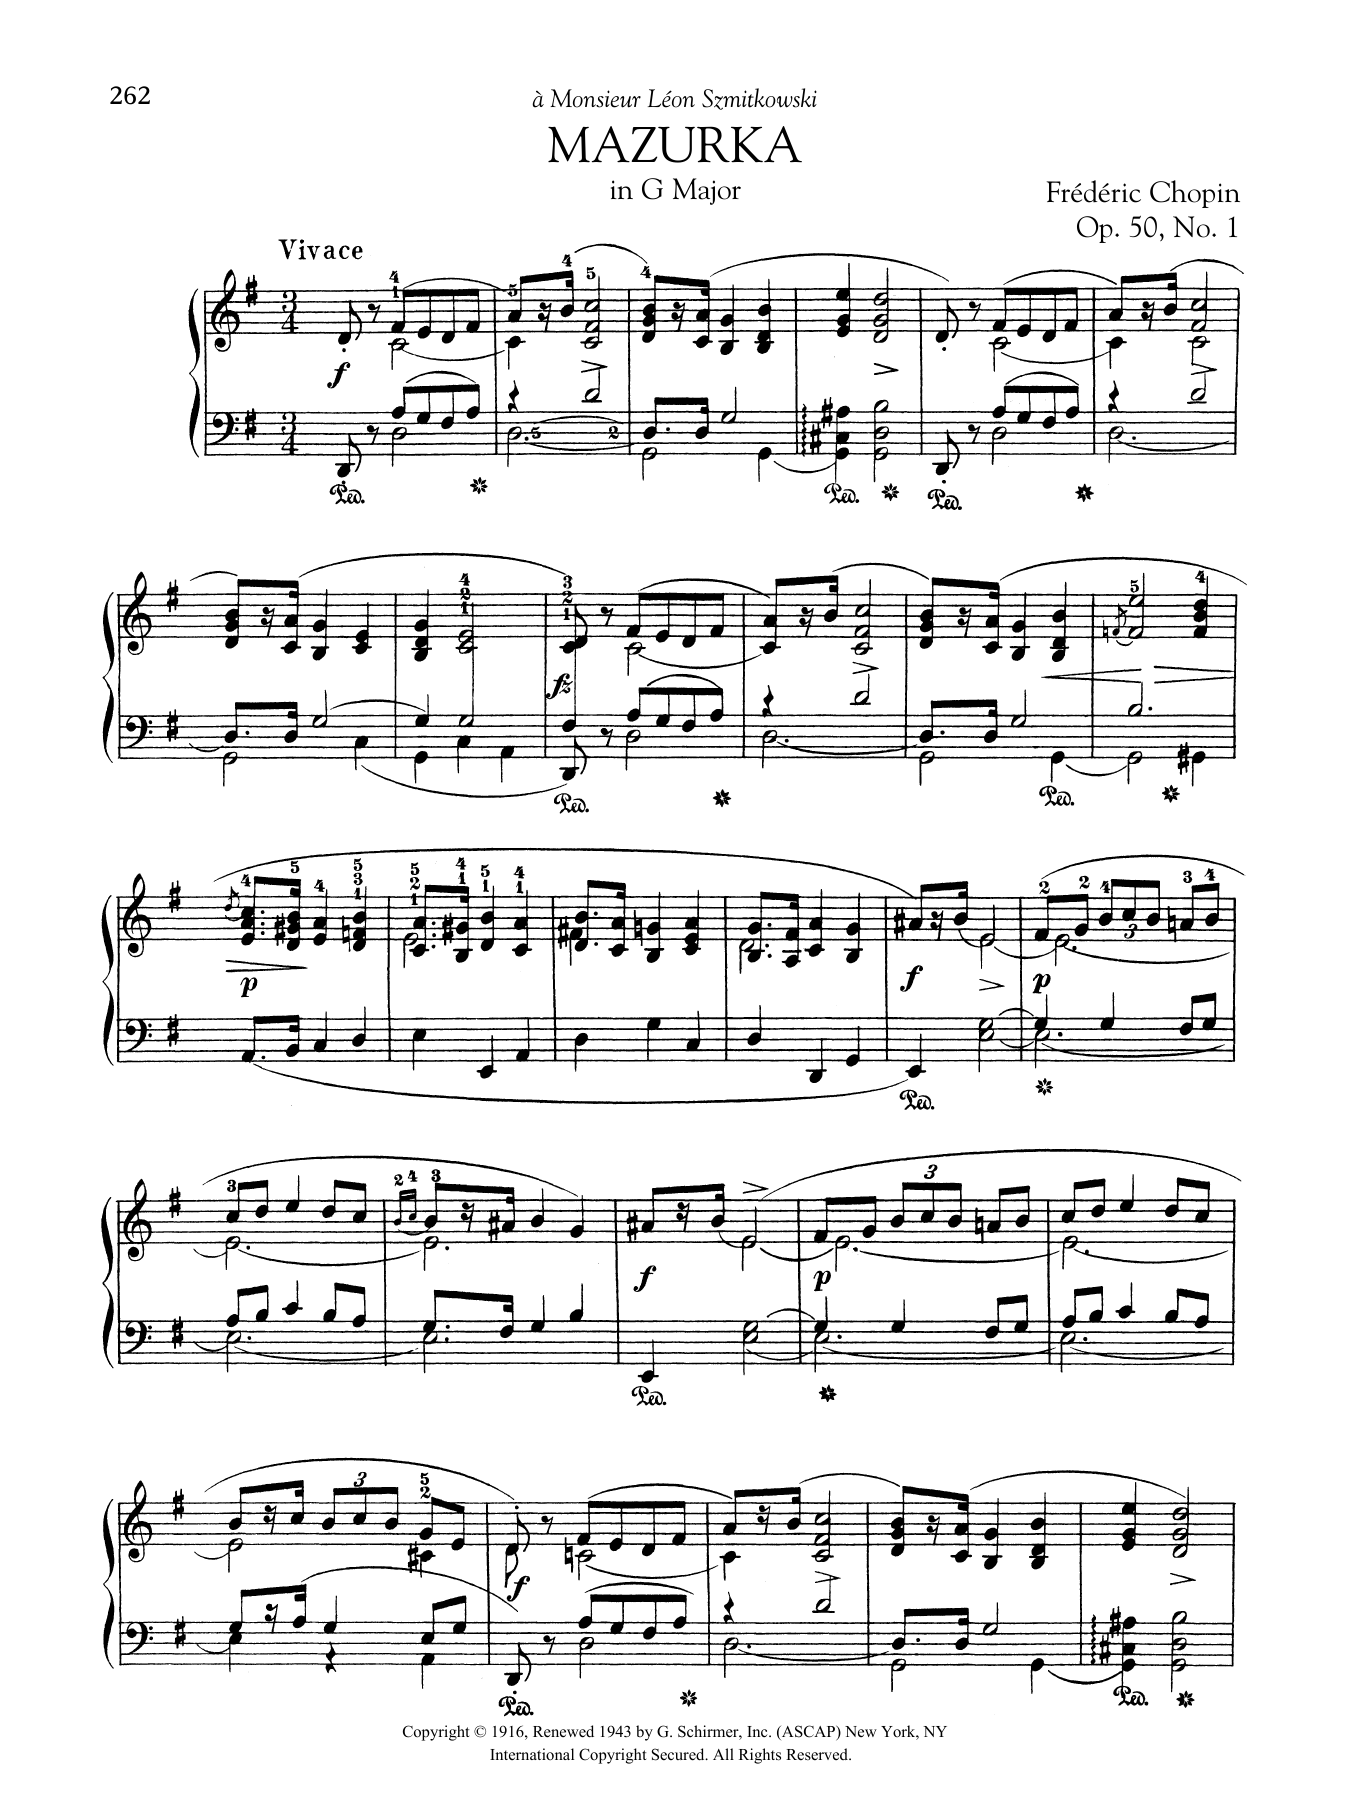 Download Frederic Chopin Mazurka in G Major, Op. 50, No. 1 Sheet Music